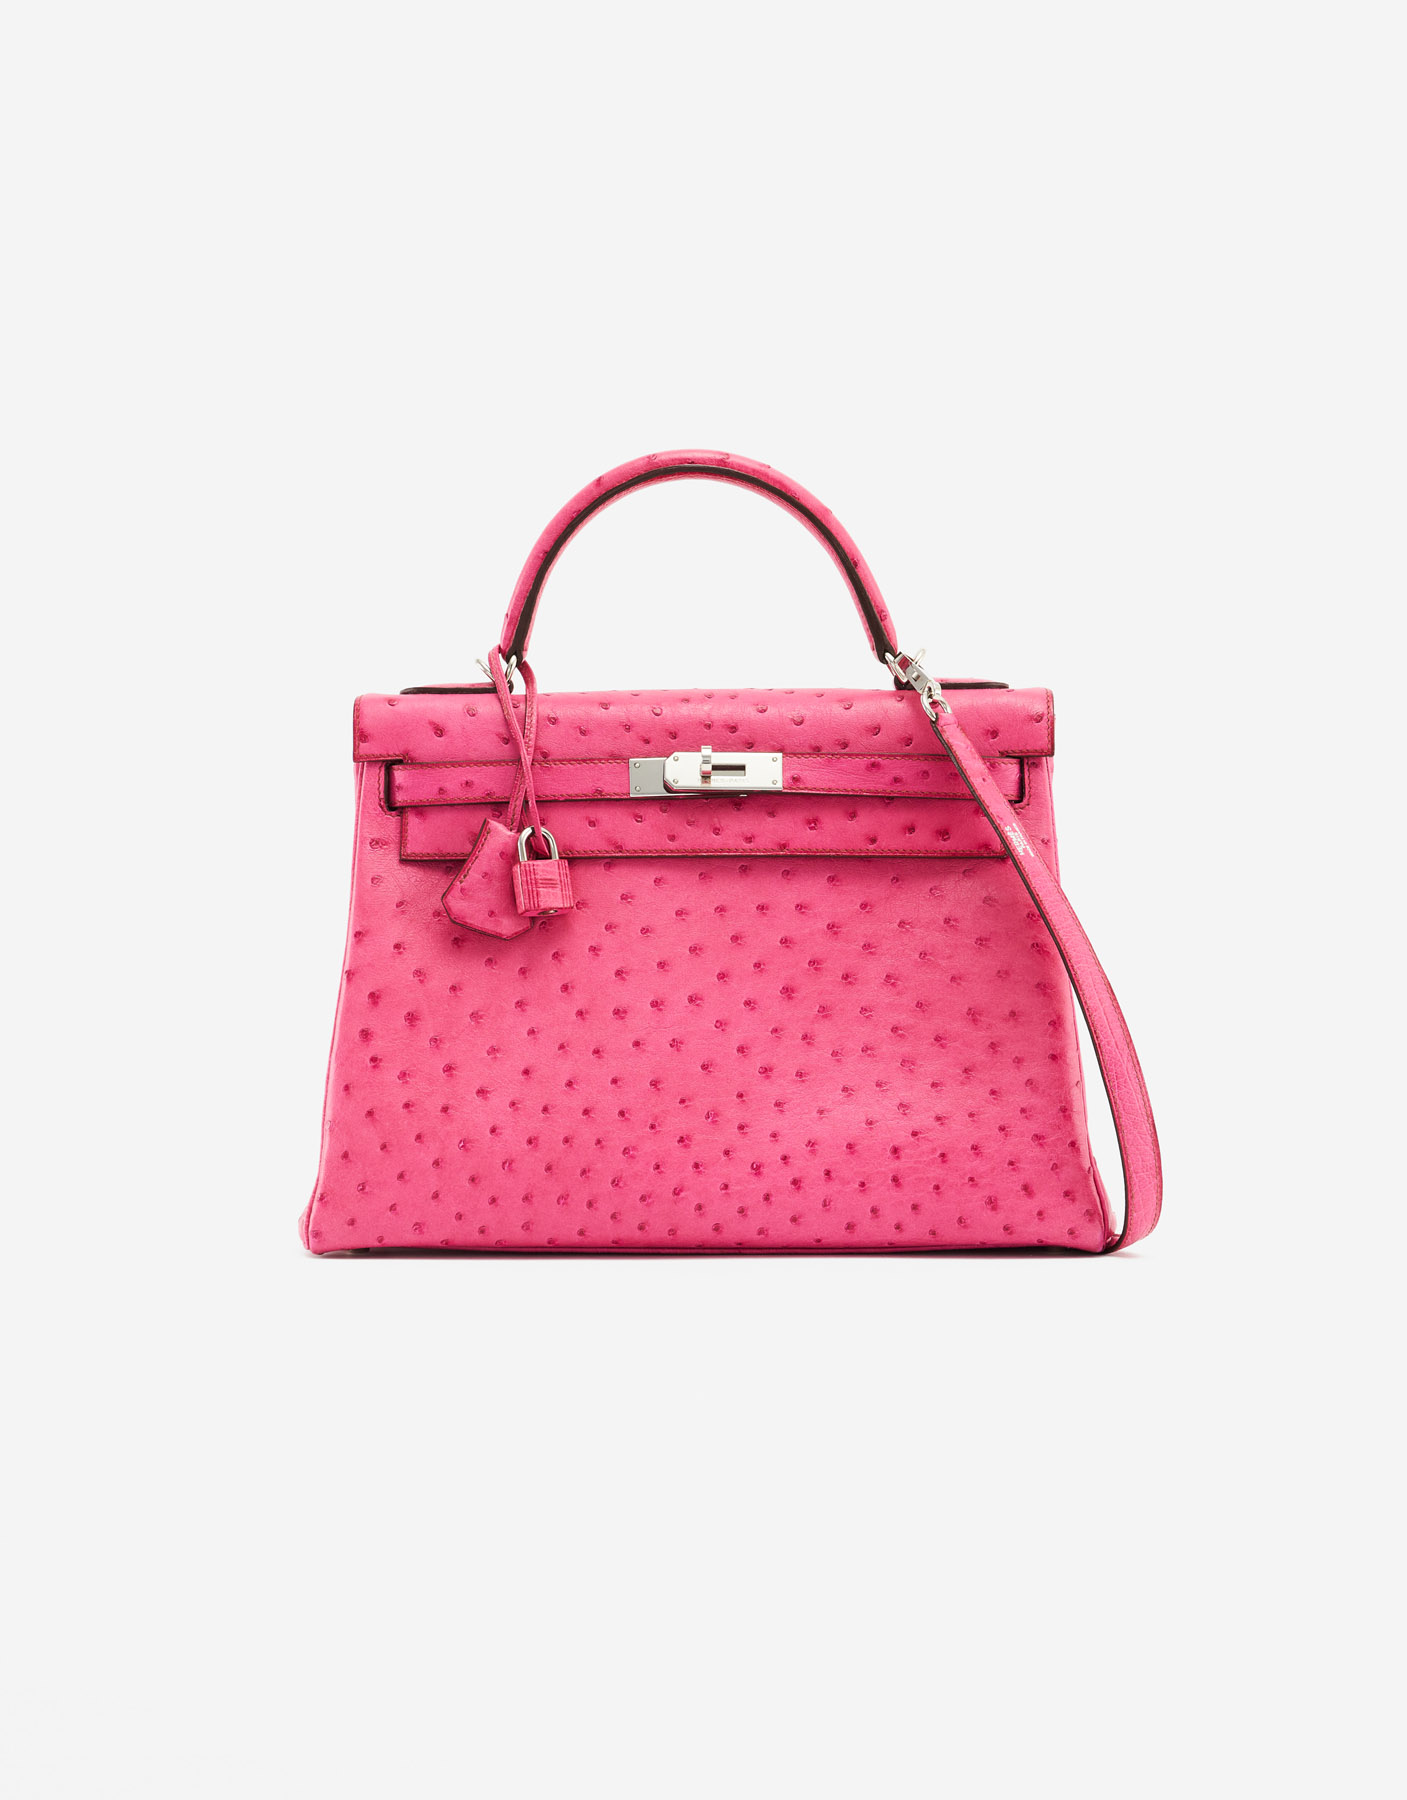 Hermès Kelly 32 Tri-Color Ostrich Bag Limited Edition